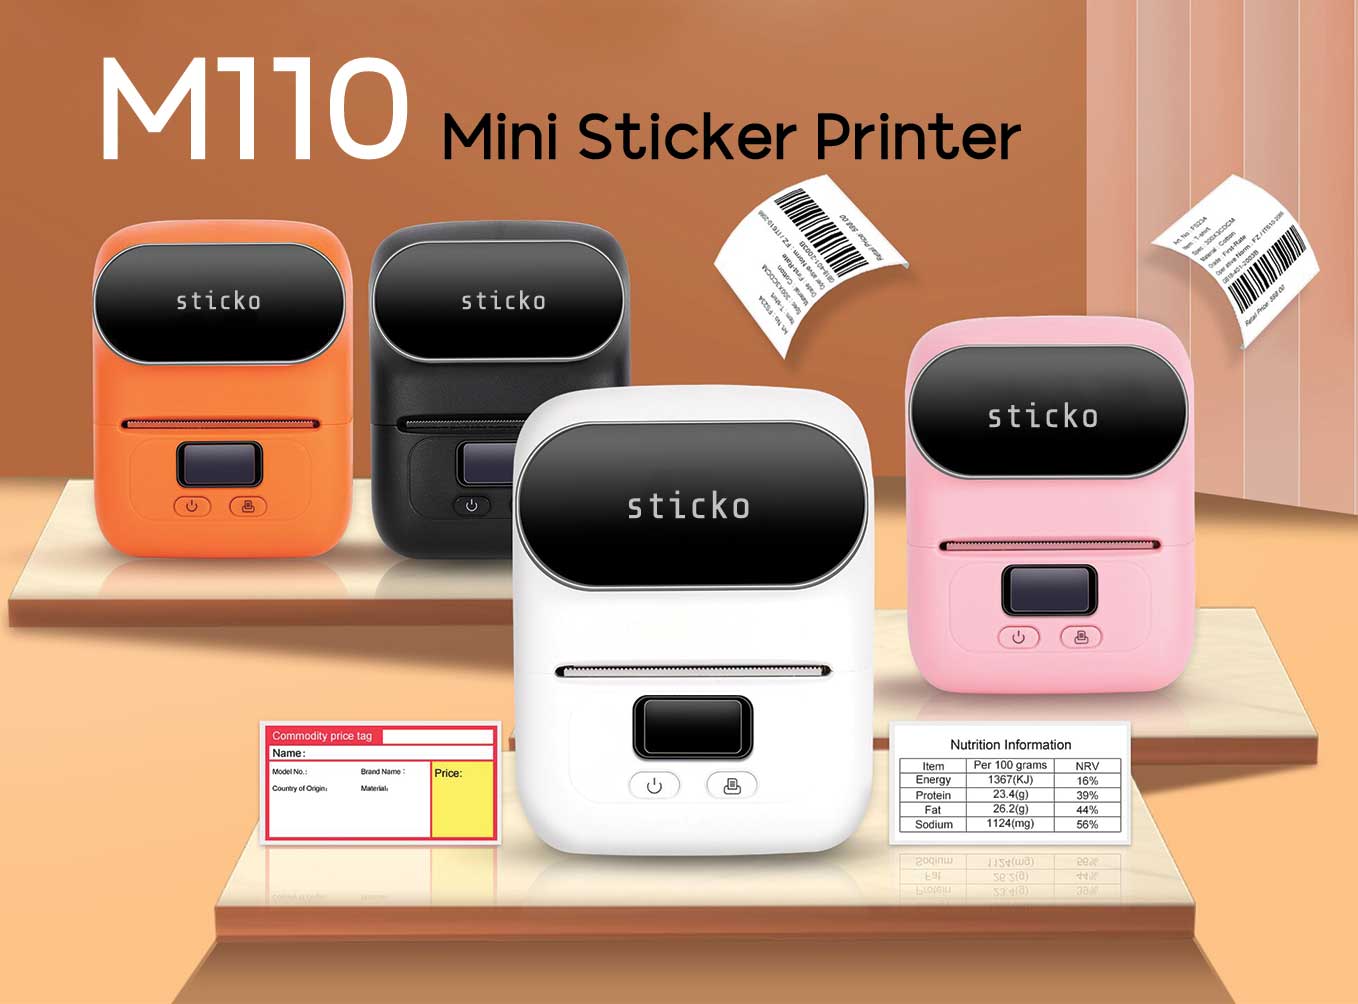 Direct-Thermal-sticker , thermalSticker , thermalLabel , stickerM110 , stickerM200 , stickoM220 , สติ็กเกอร์ไดคัทบาร์โค้ดกันน้ำ , สติ๊กเกอร์ความร้อน , เครื่องพิมพ์บาร์โค้ด  , stickoM200printer , stickoM220printer , M110printer , เครื่องปริ้นสติ๊กเกอร์ ,